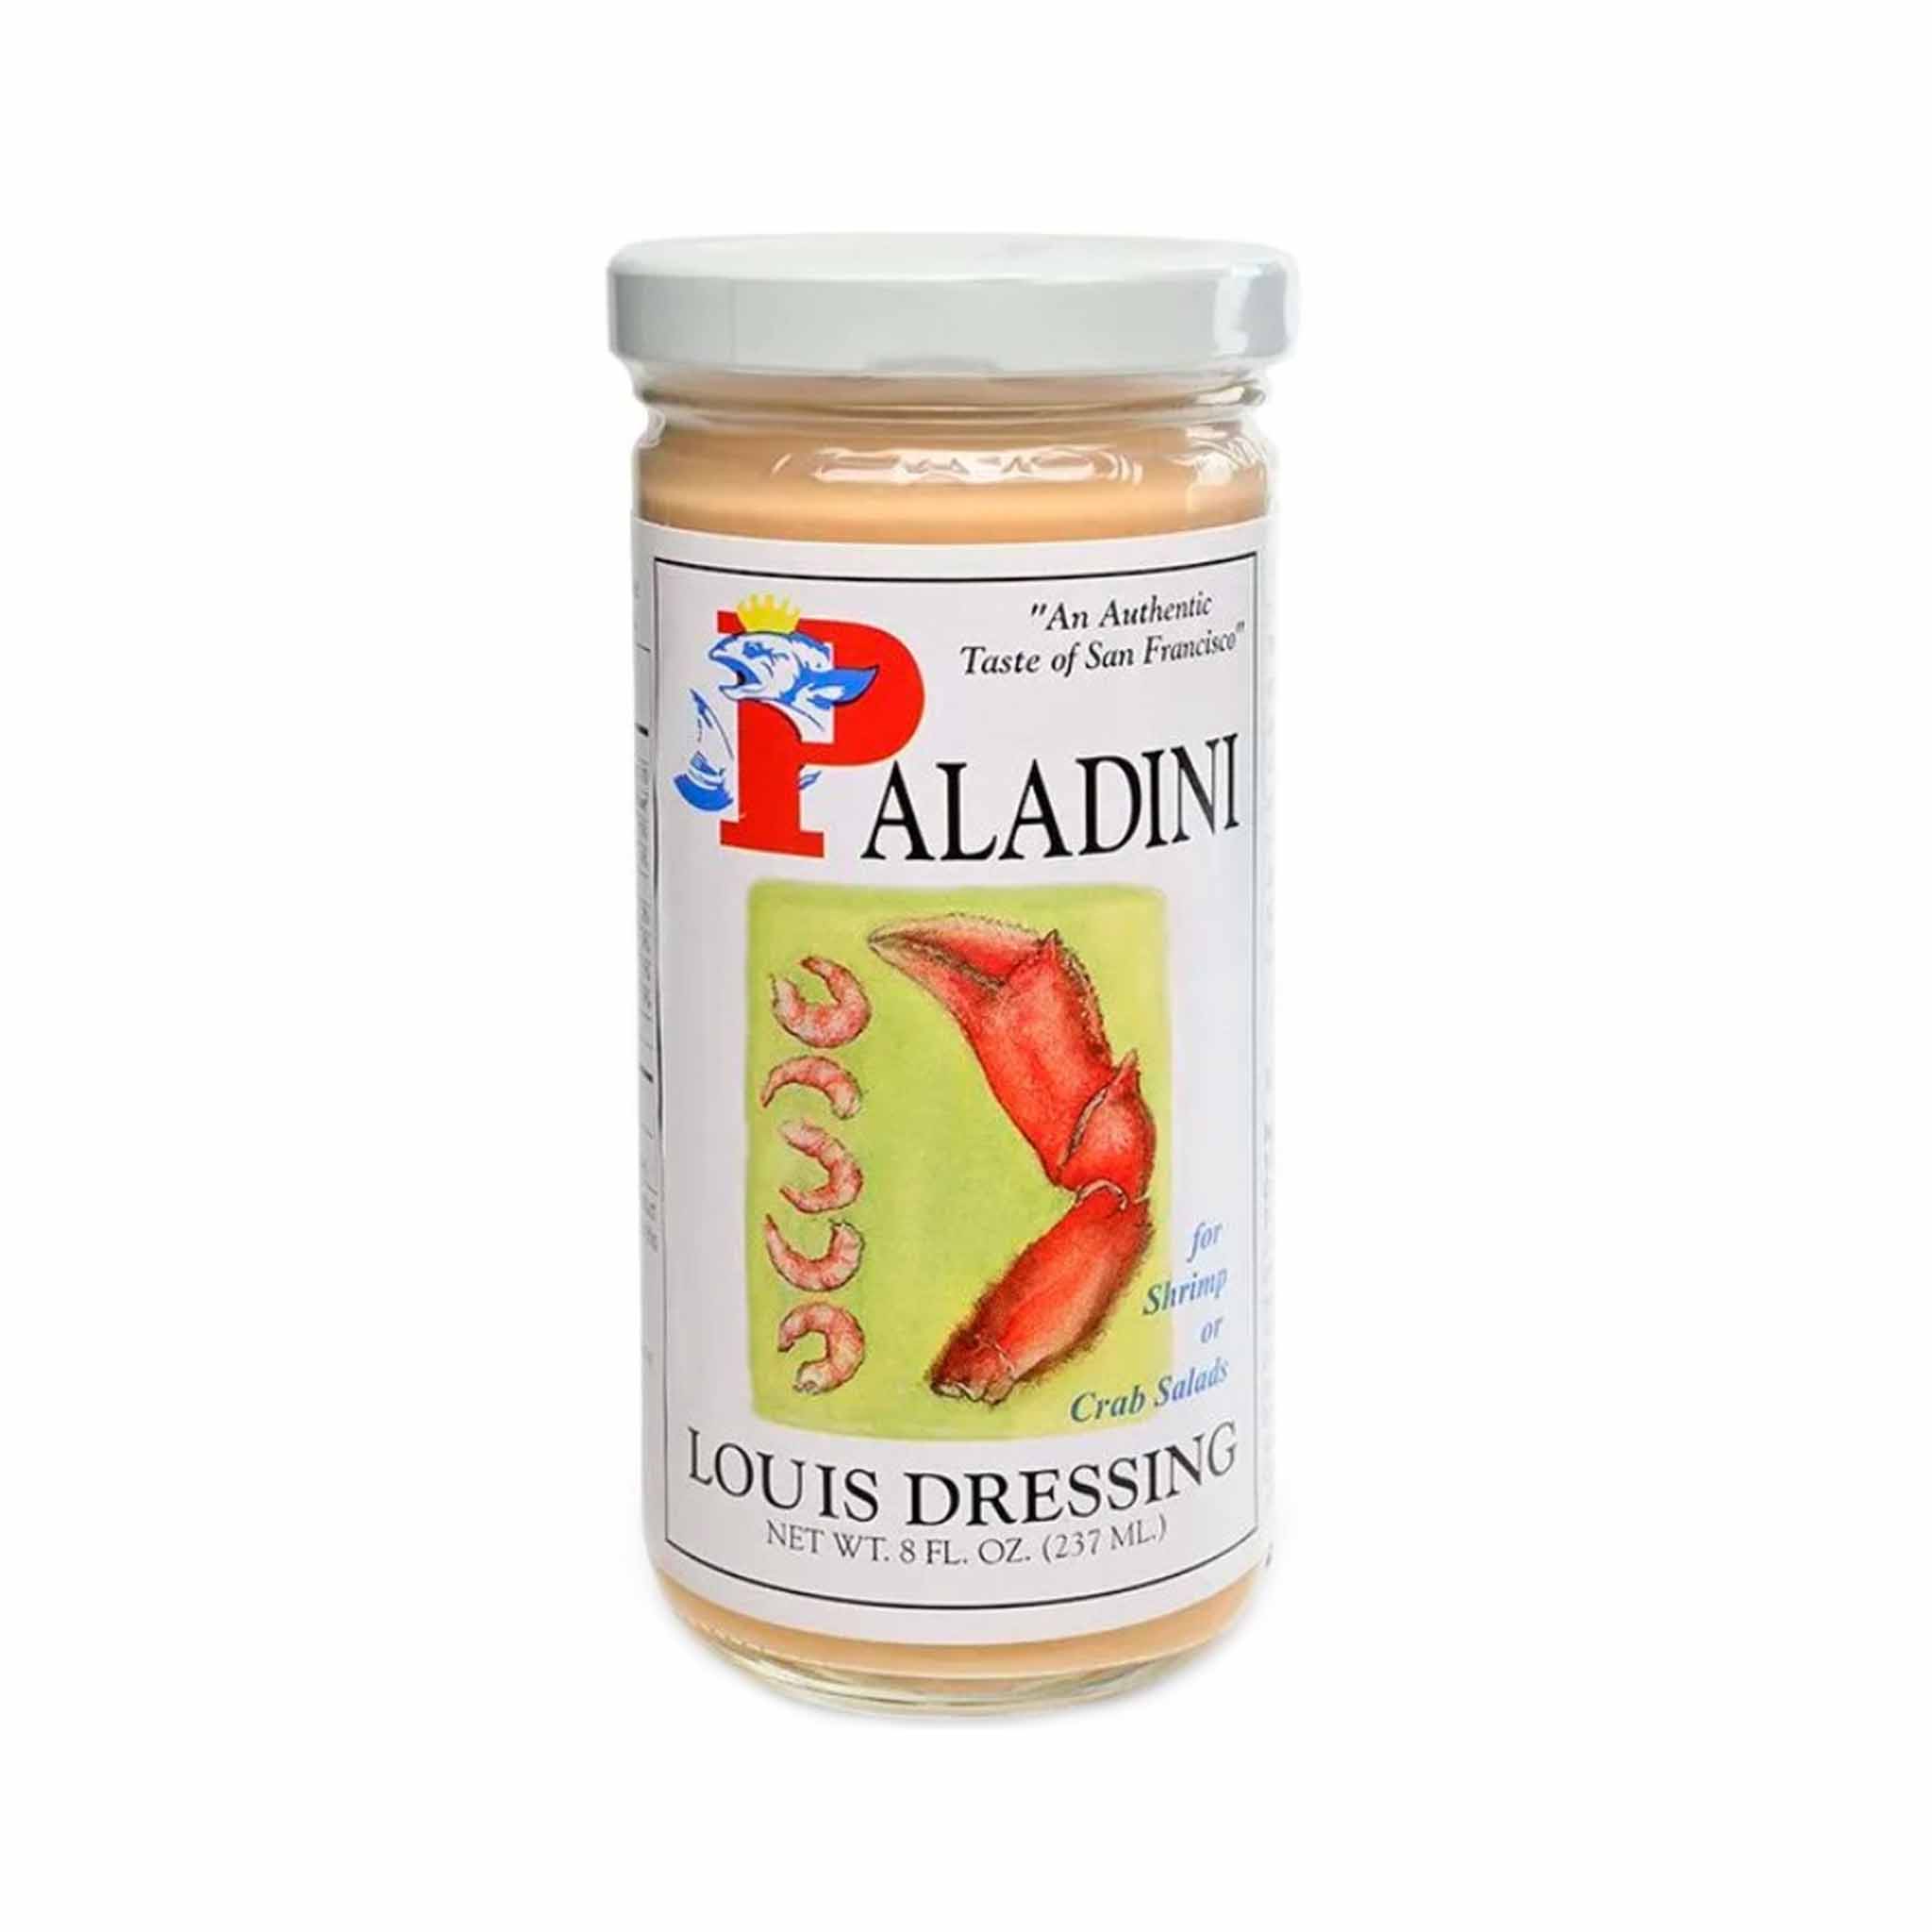 Paladini Louis Dressing for Shrimp or Crab Salad